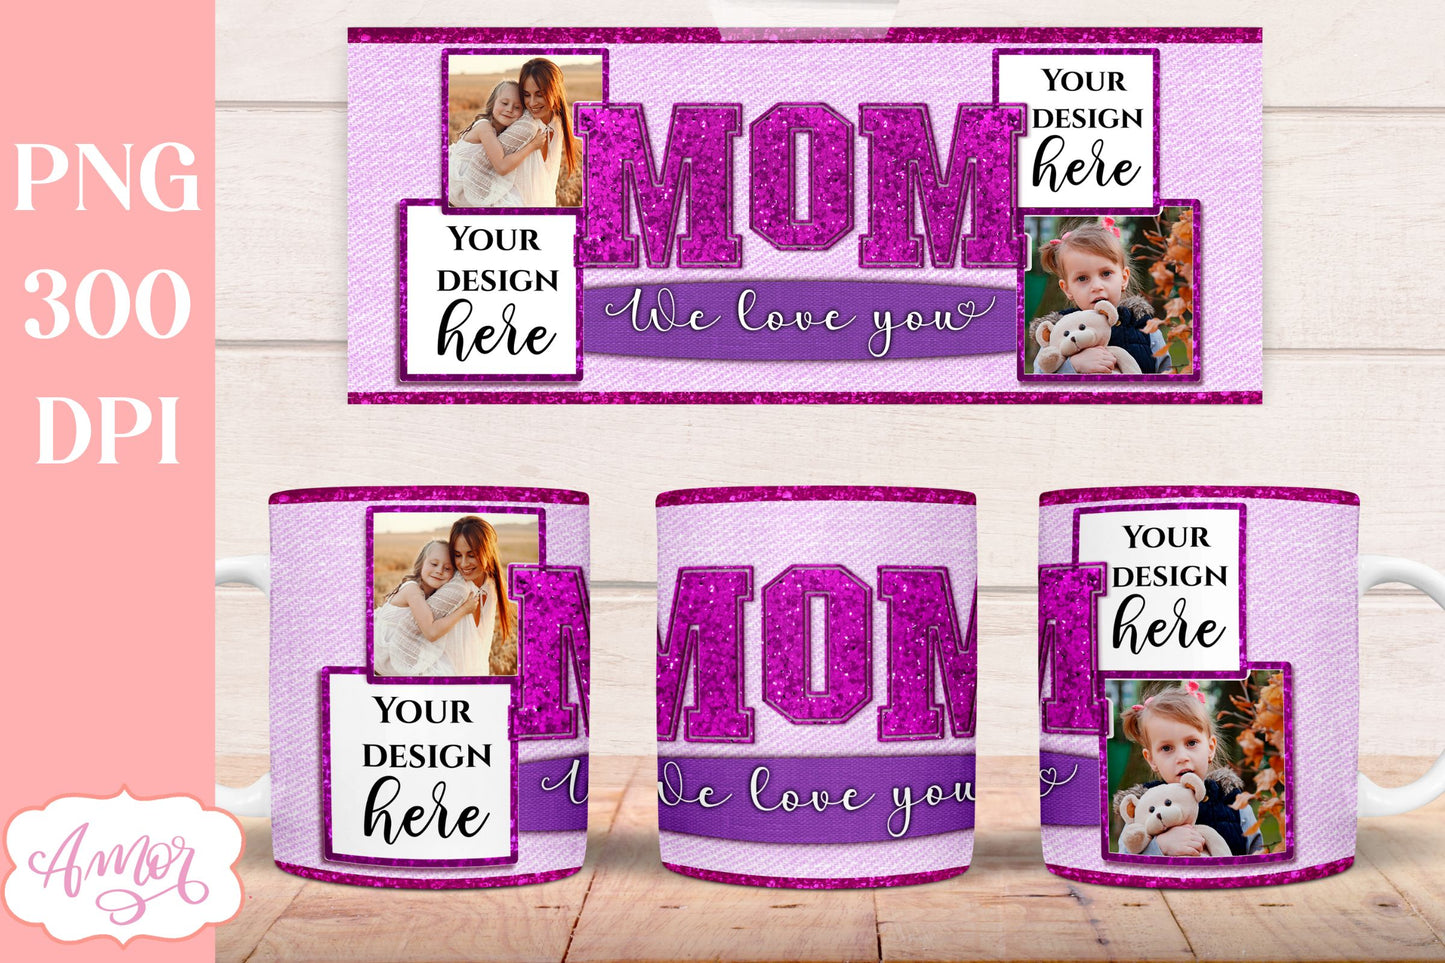 Mom Photo Mug Wrap PNG for sublimation | Mother's day mug PNG